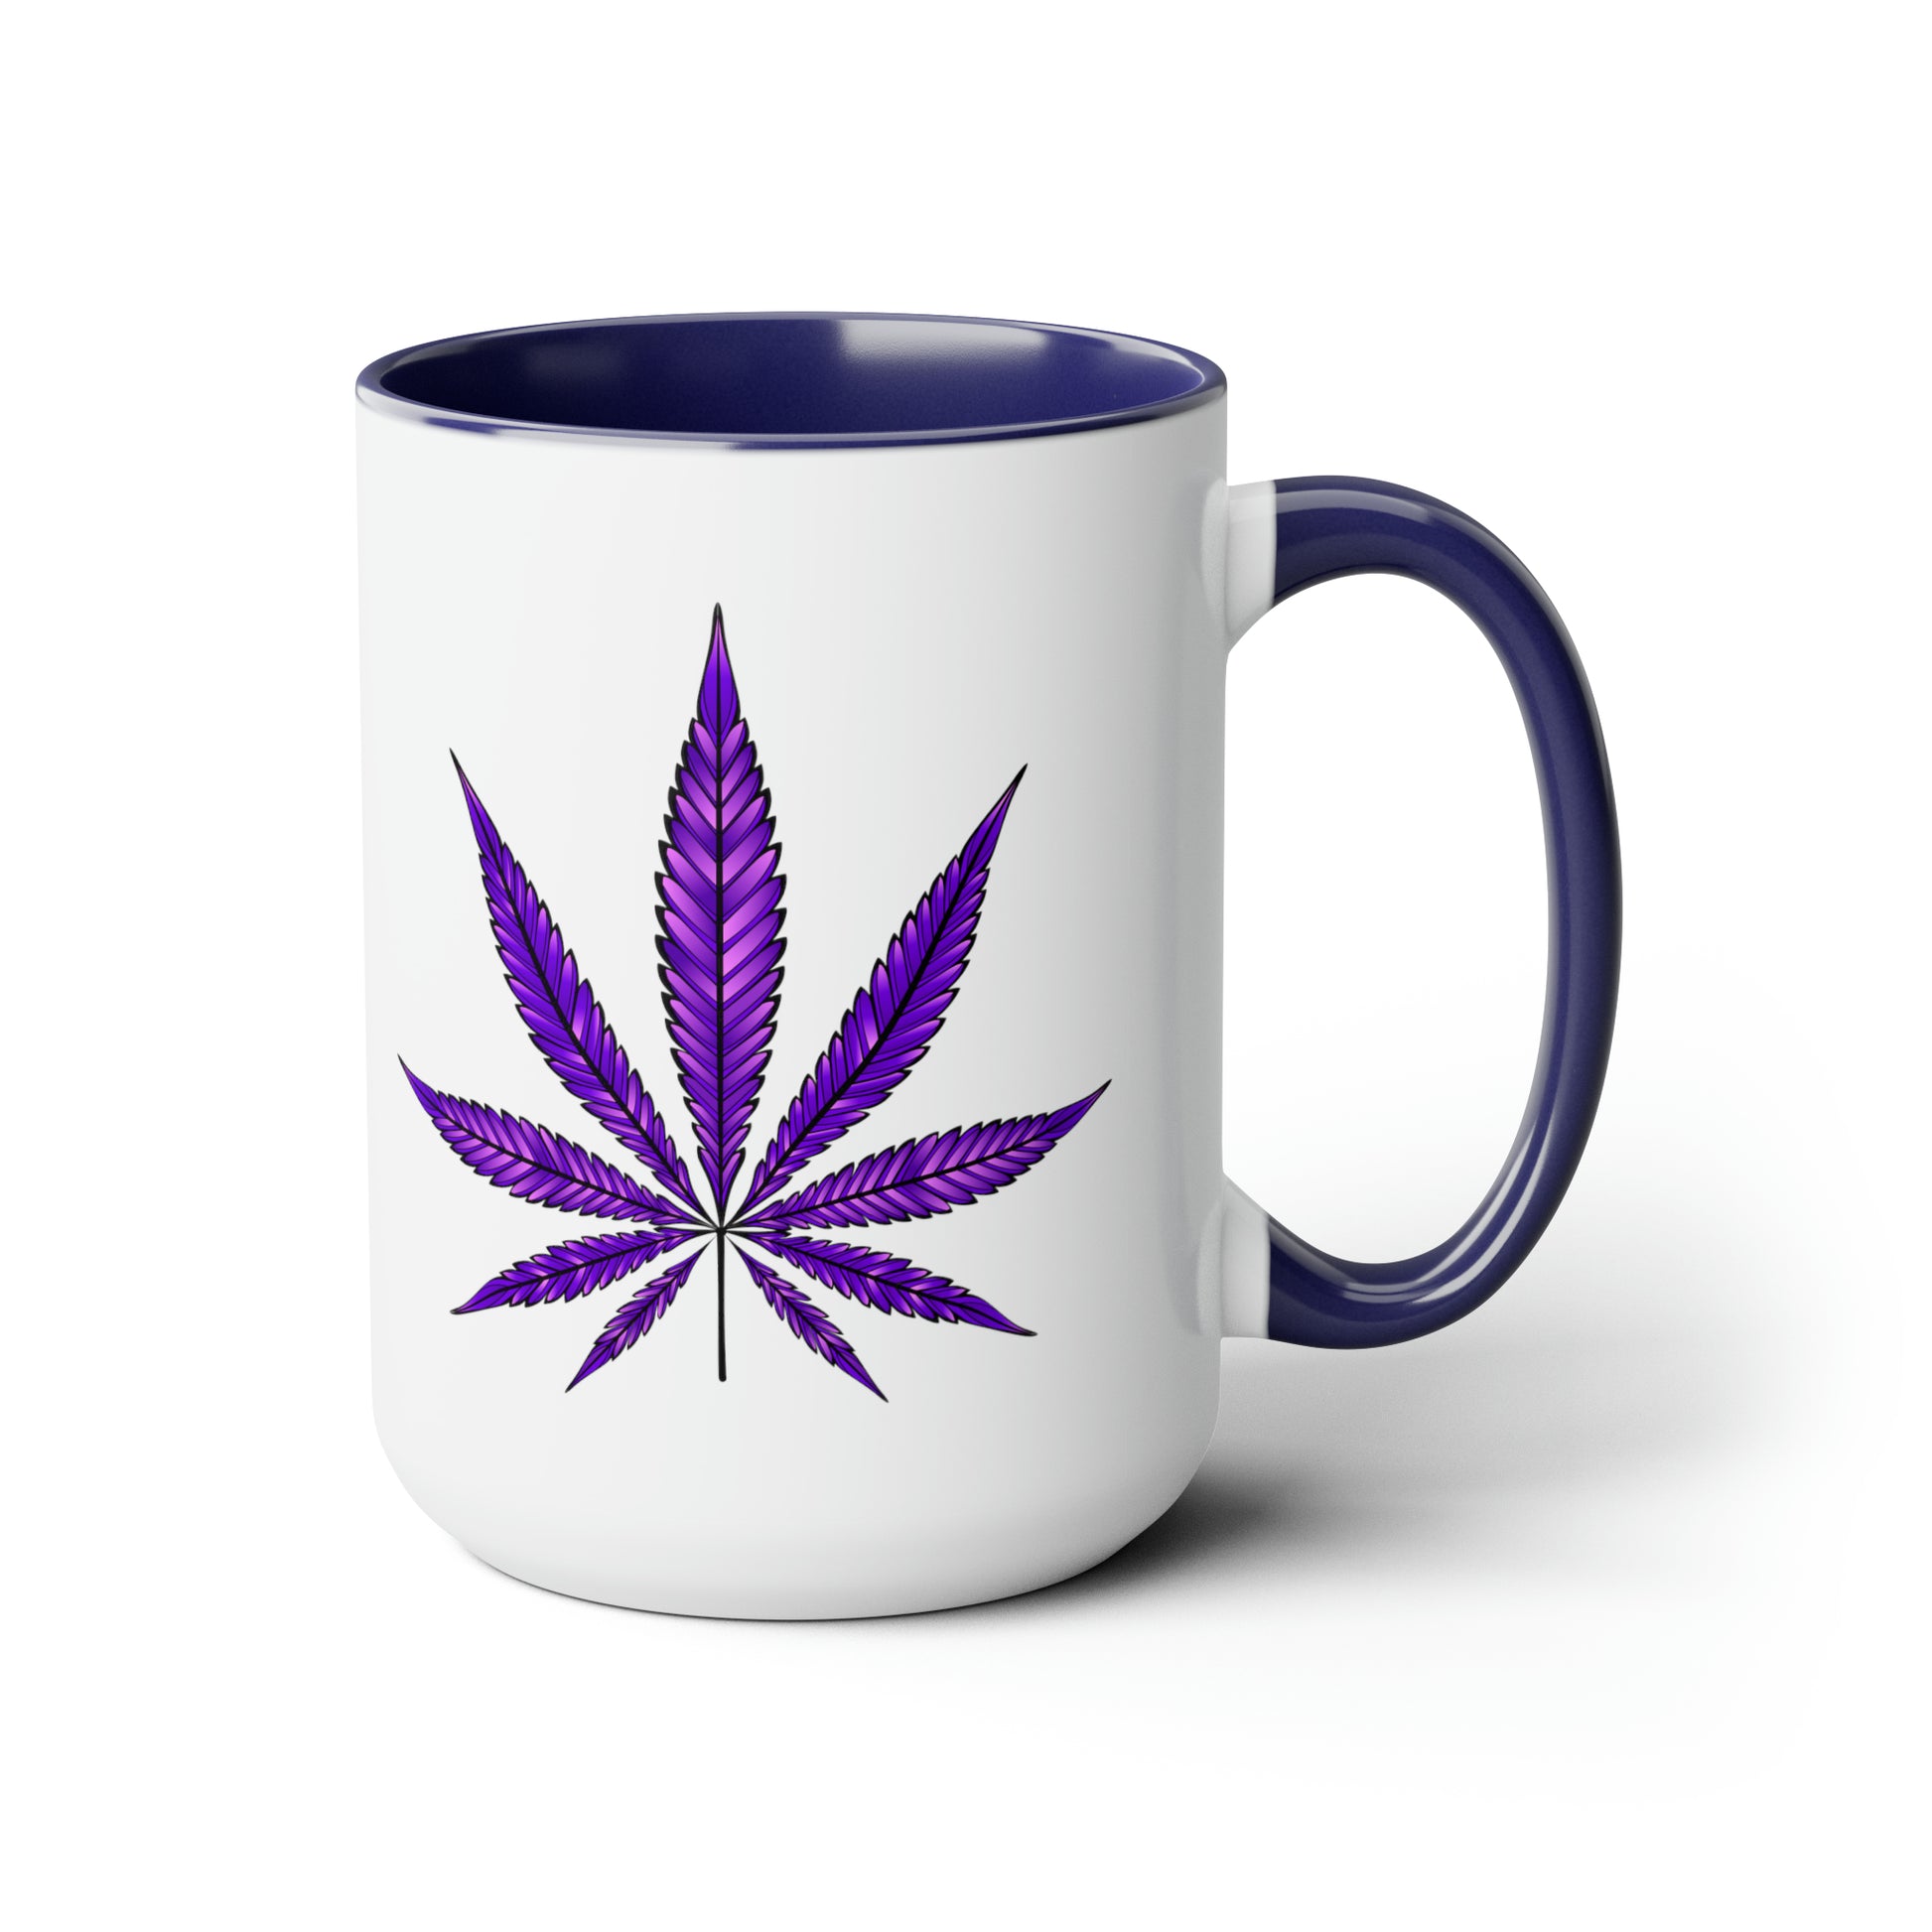 Purple Haze Marijuana Coffee Mug with a Purple Haze Marijuana leaf design on the side, featuring a blue interior and handle, isolated on a white background.